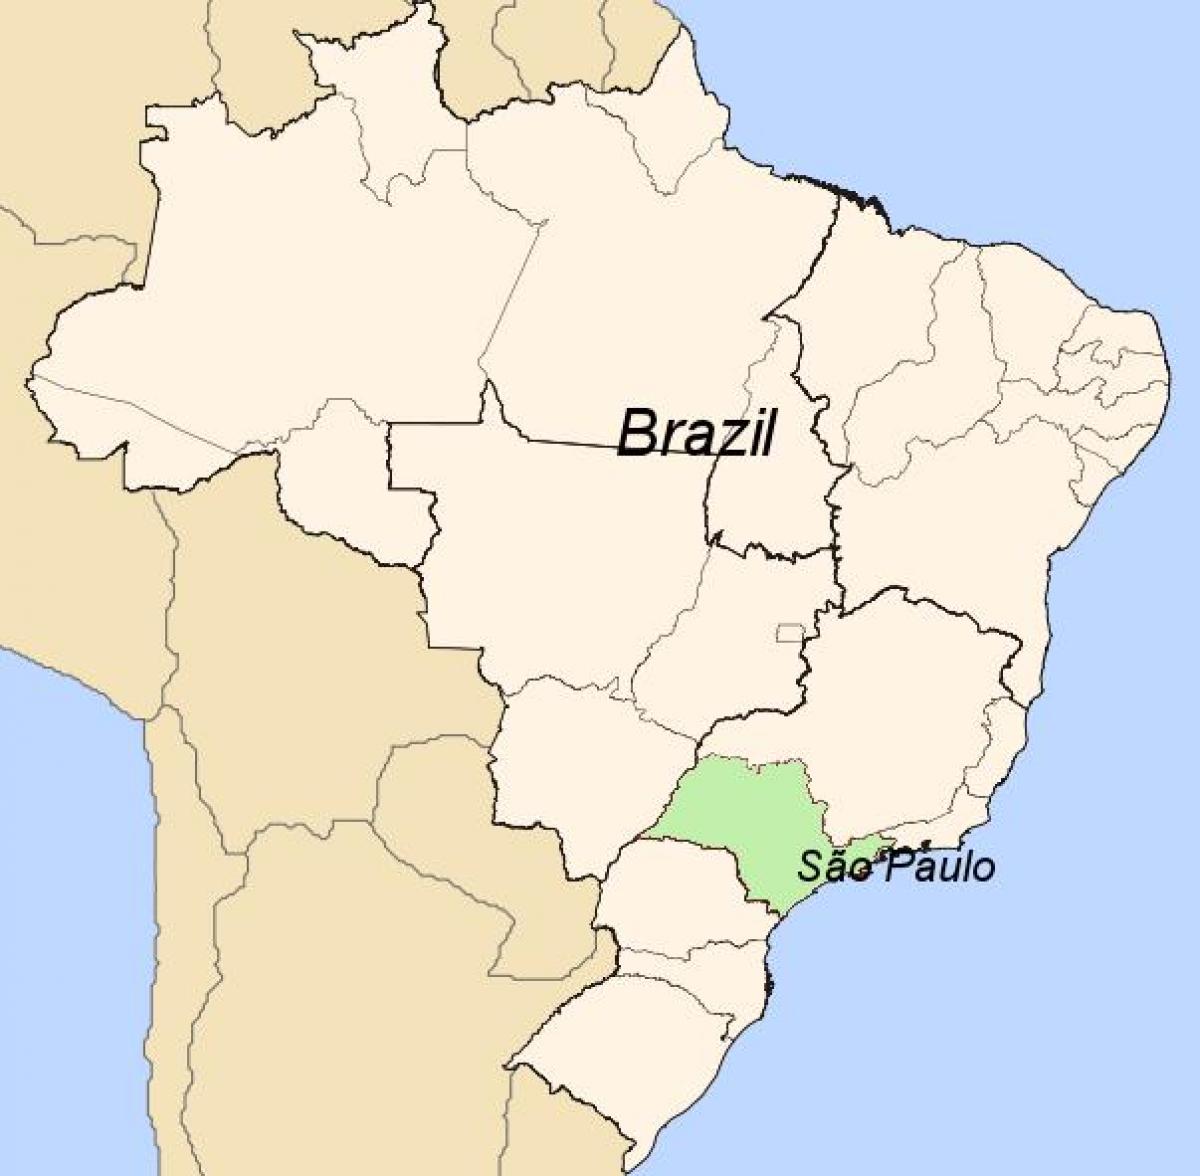 Kort over São Paulo, Brasilien